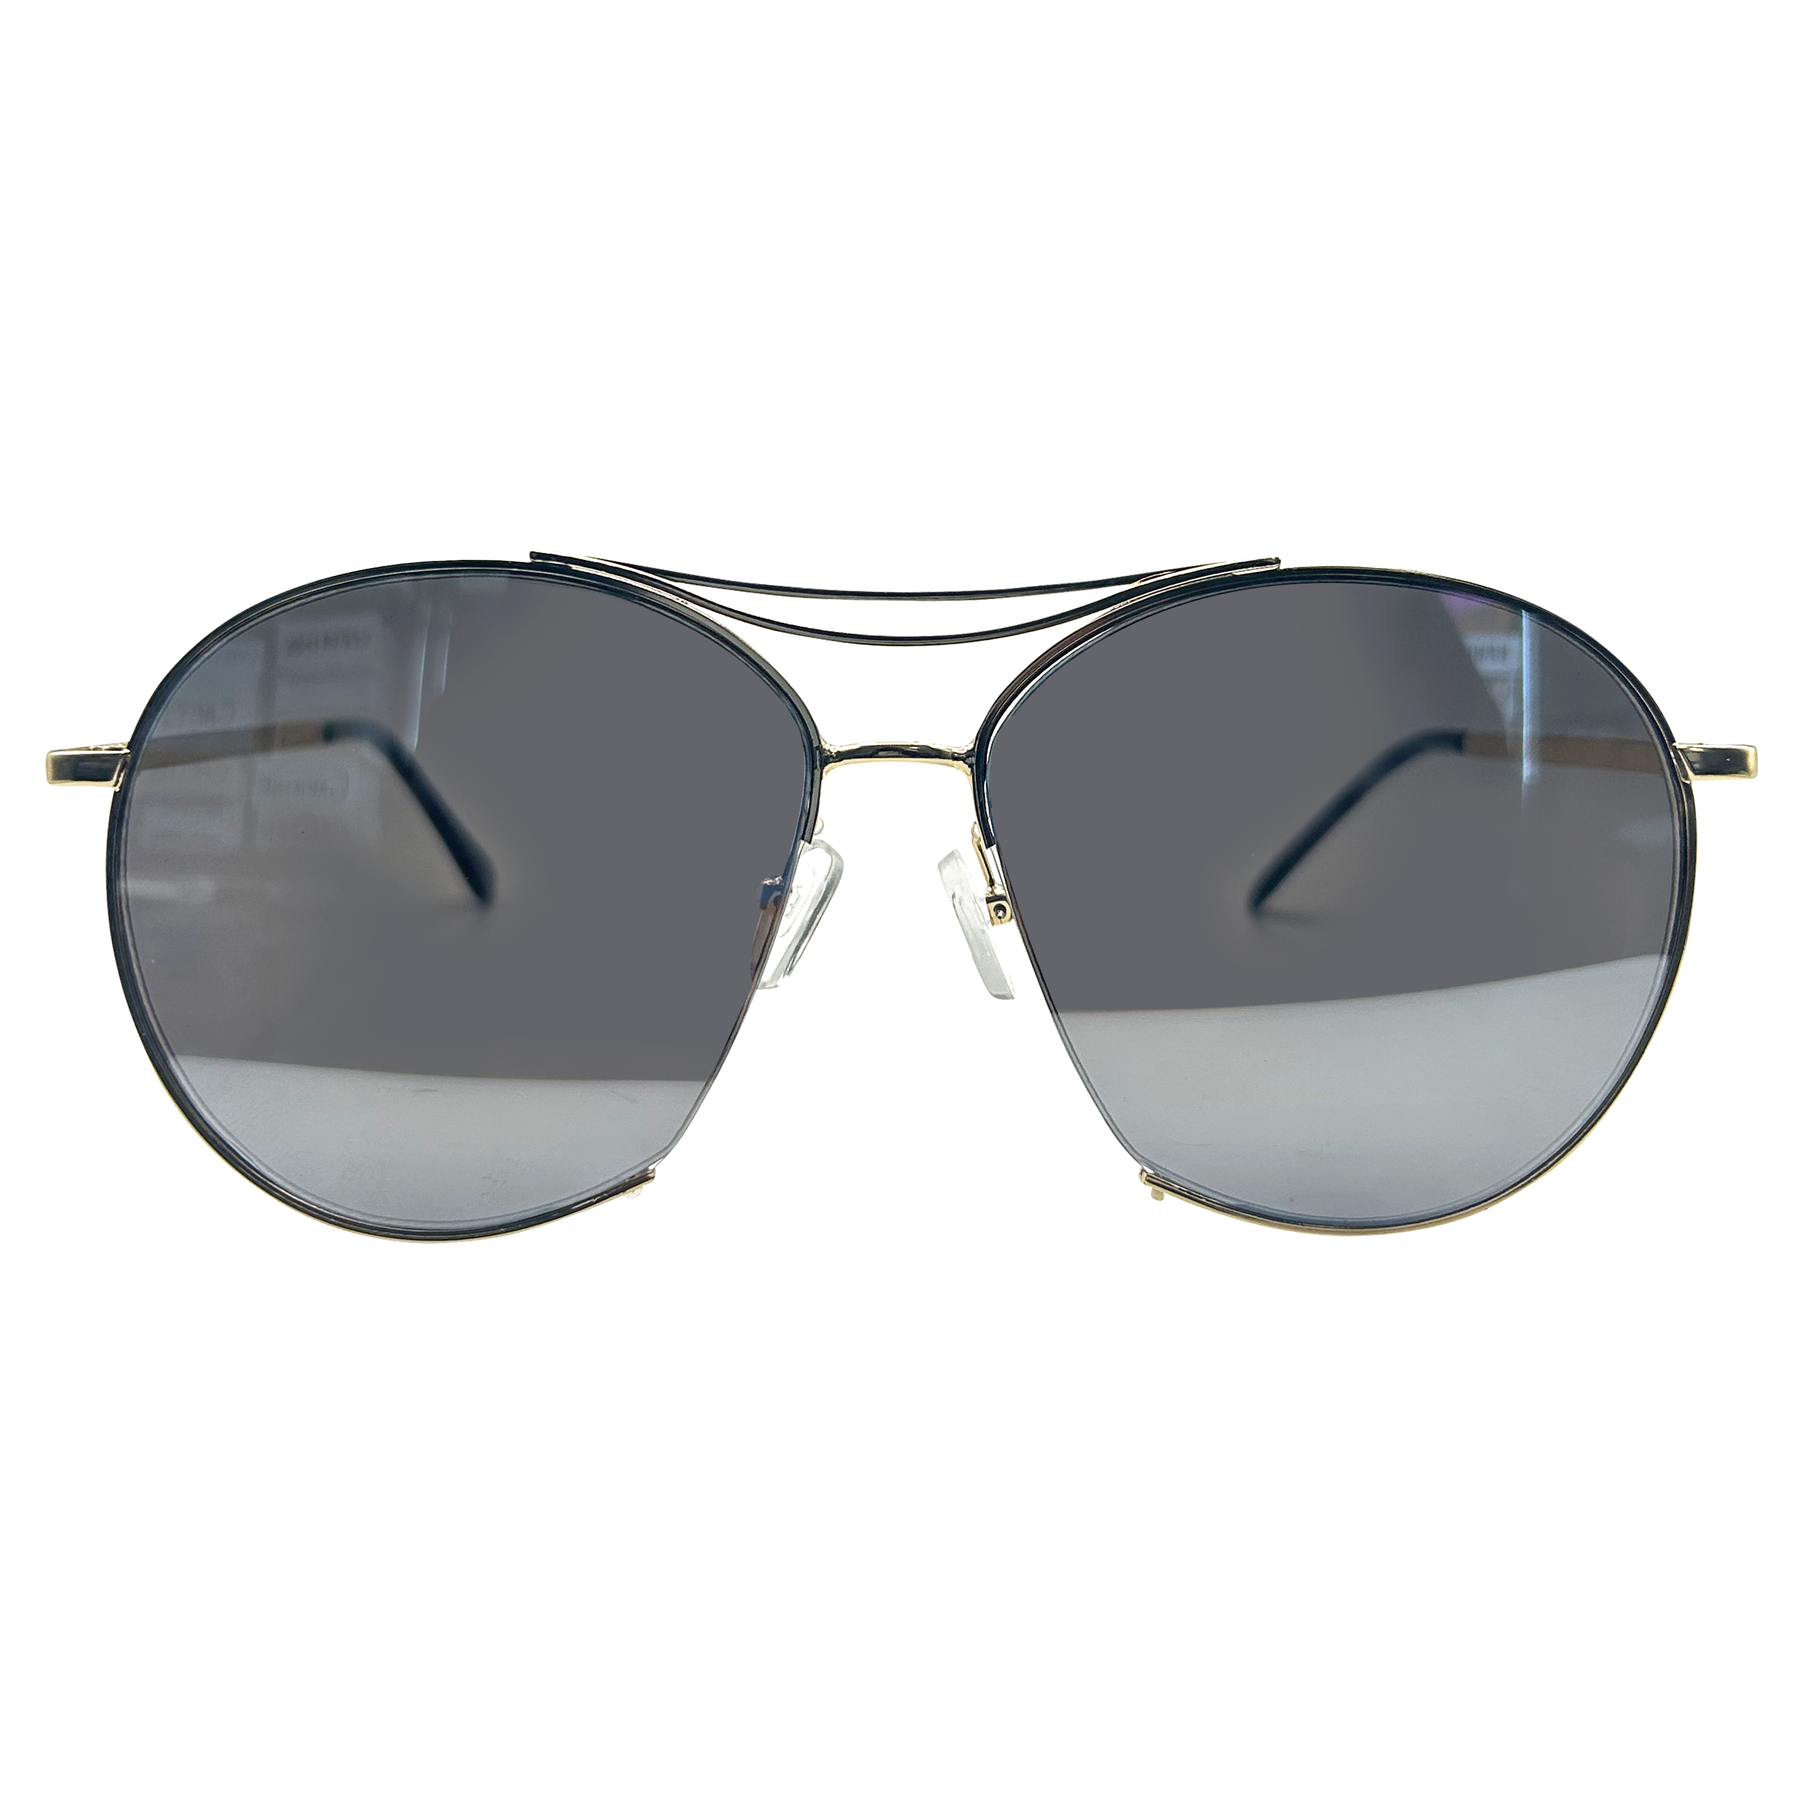 BRONSON Oversized Semi-Rimless Aviator Sunglasses